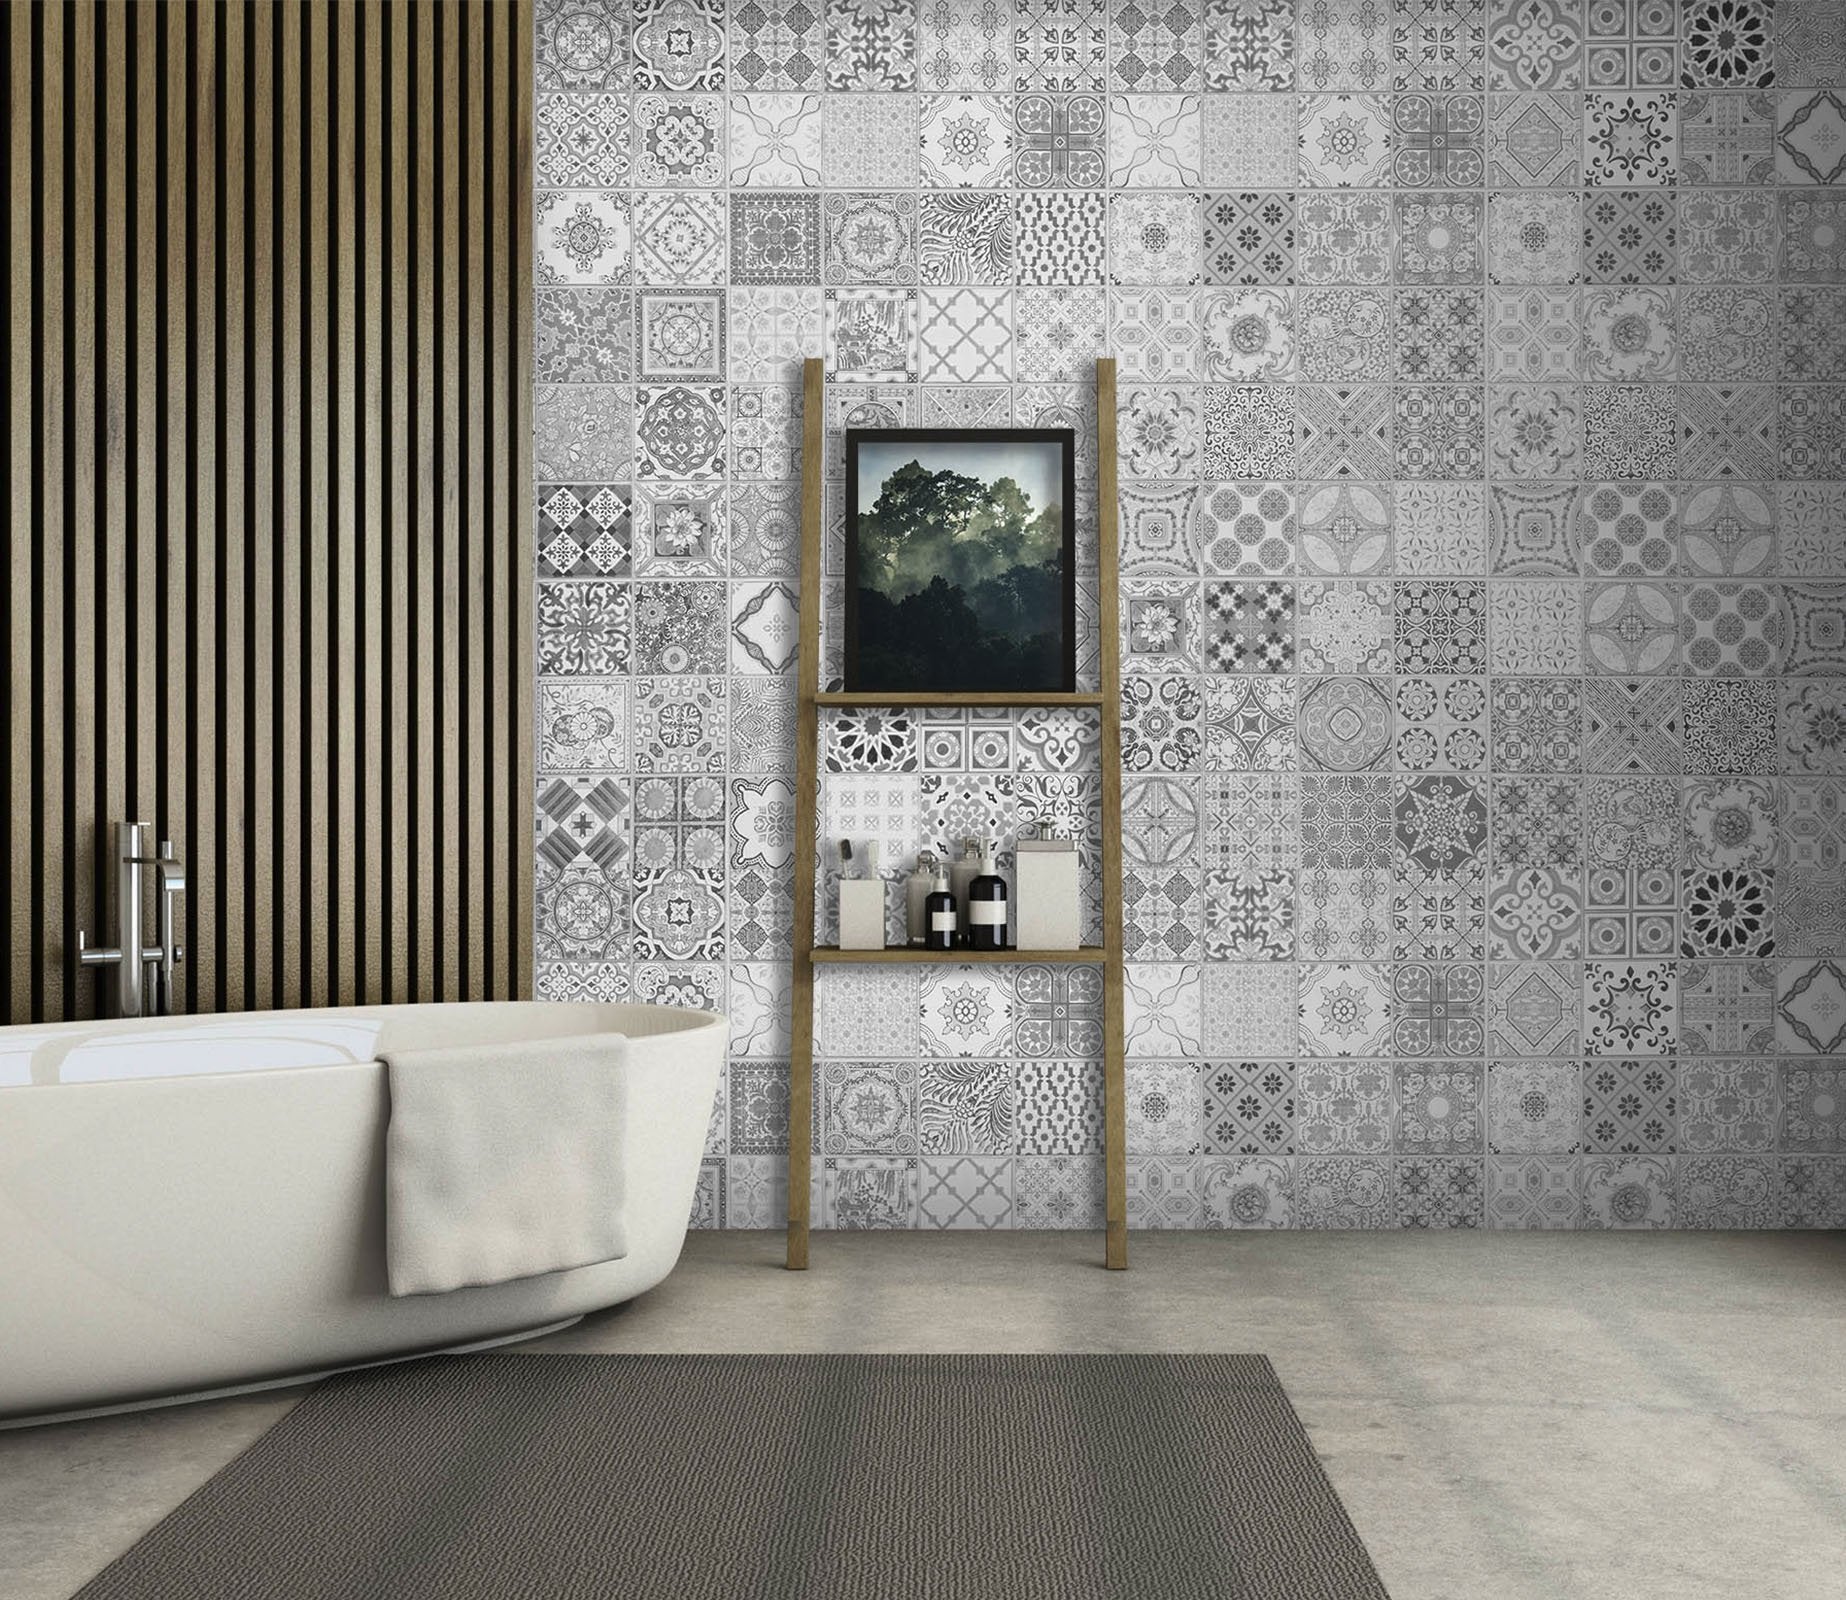 3D Mosaic Pattern 016 Marble Tile Texture Wallpaper AJ Wallpaper 2 